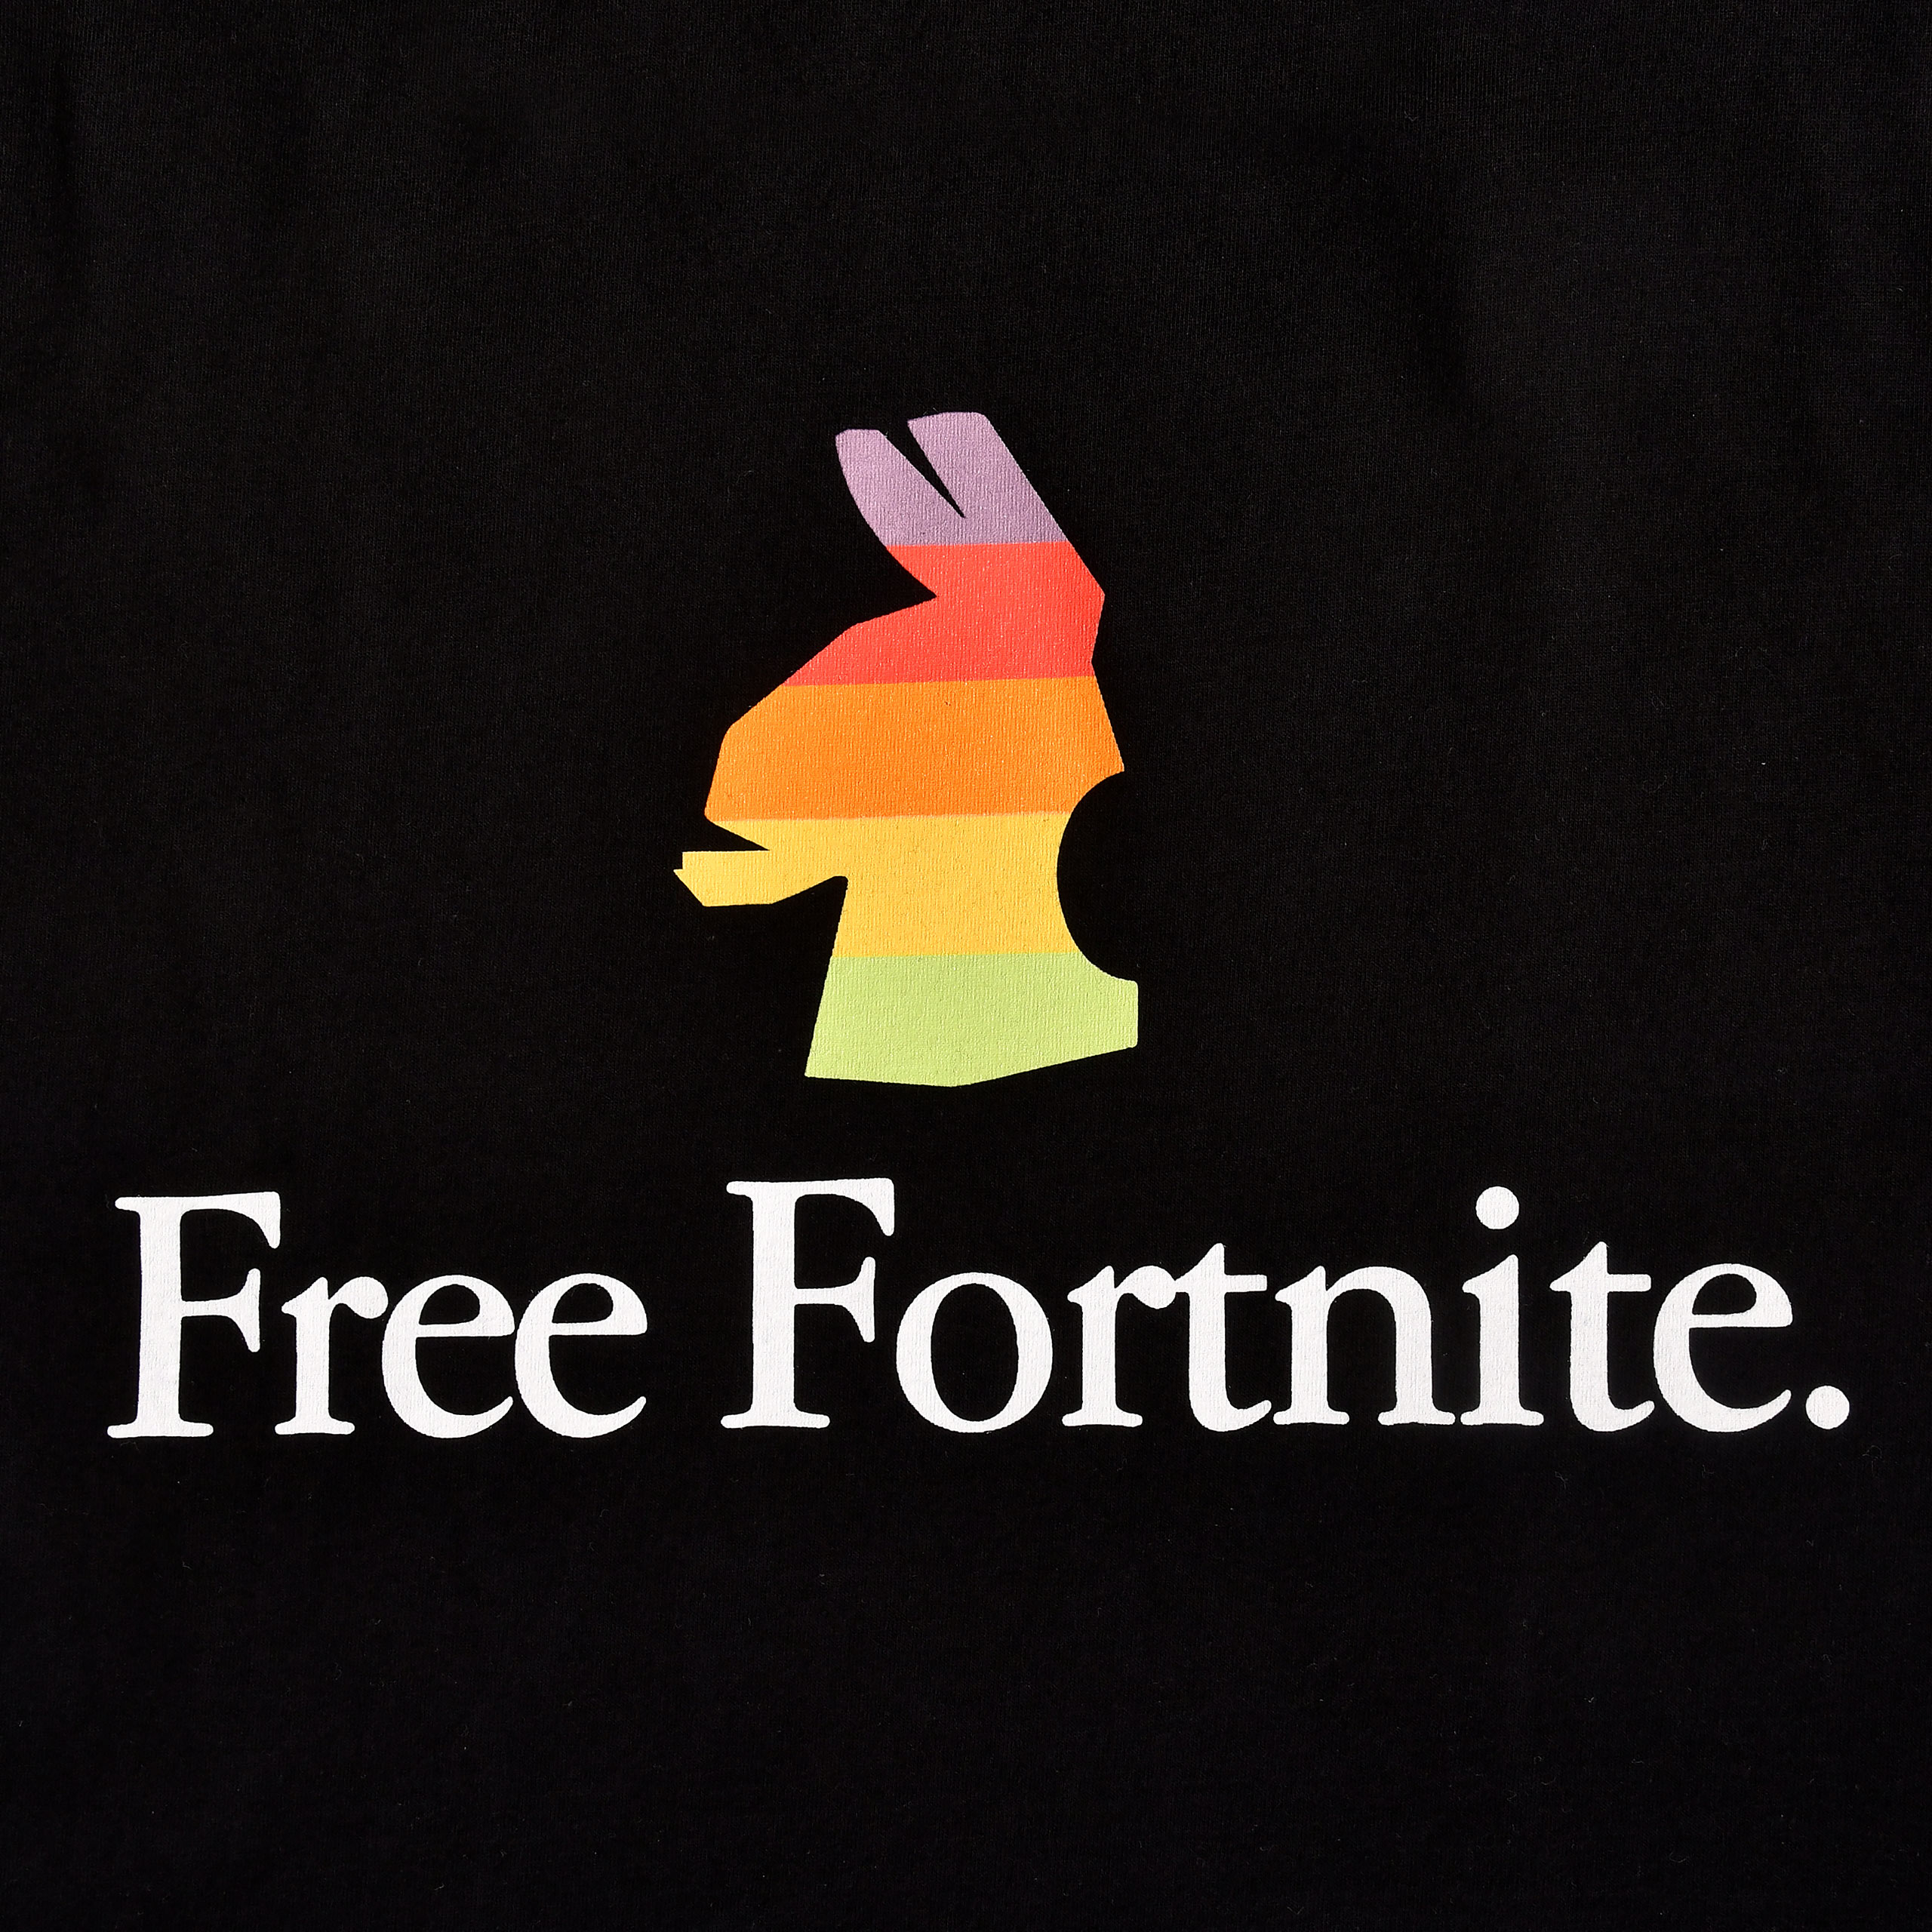 Fortnite - Free Fortnite T-Shirt black